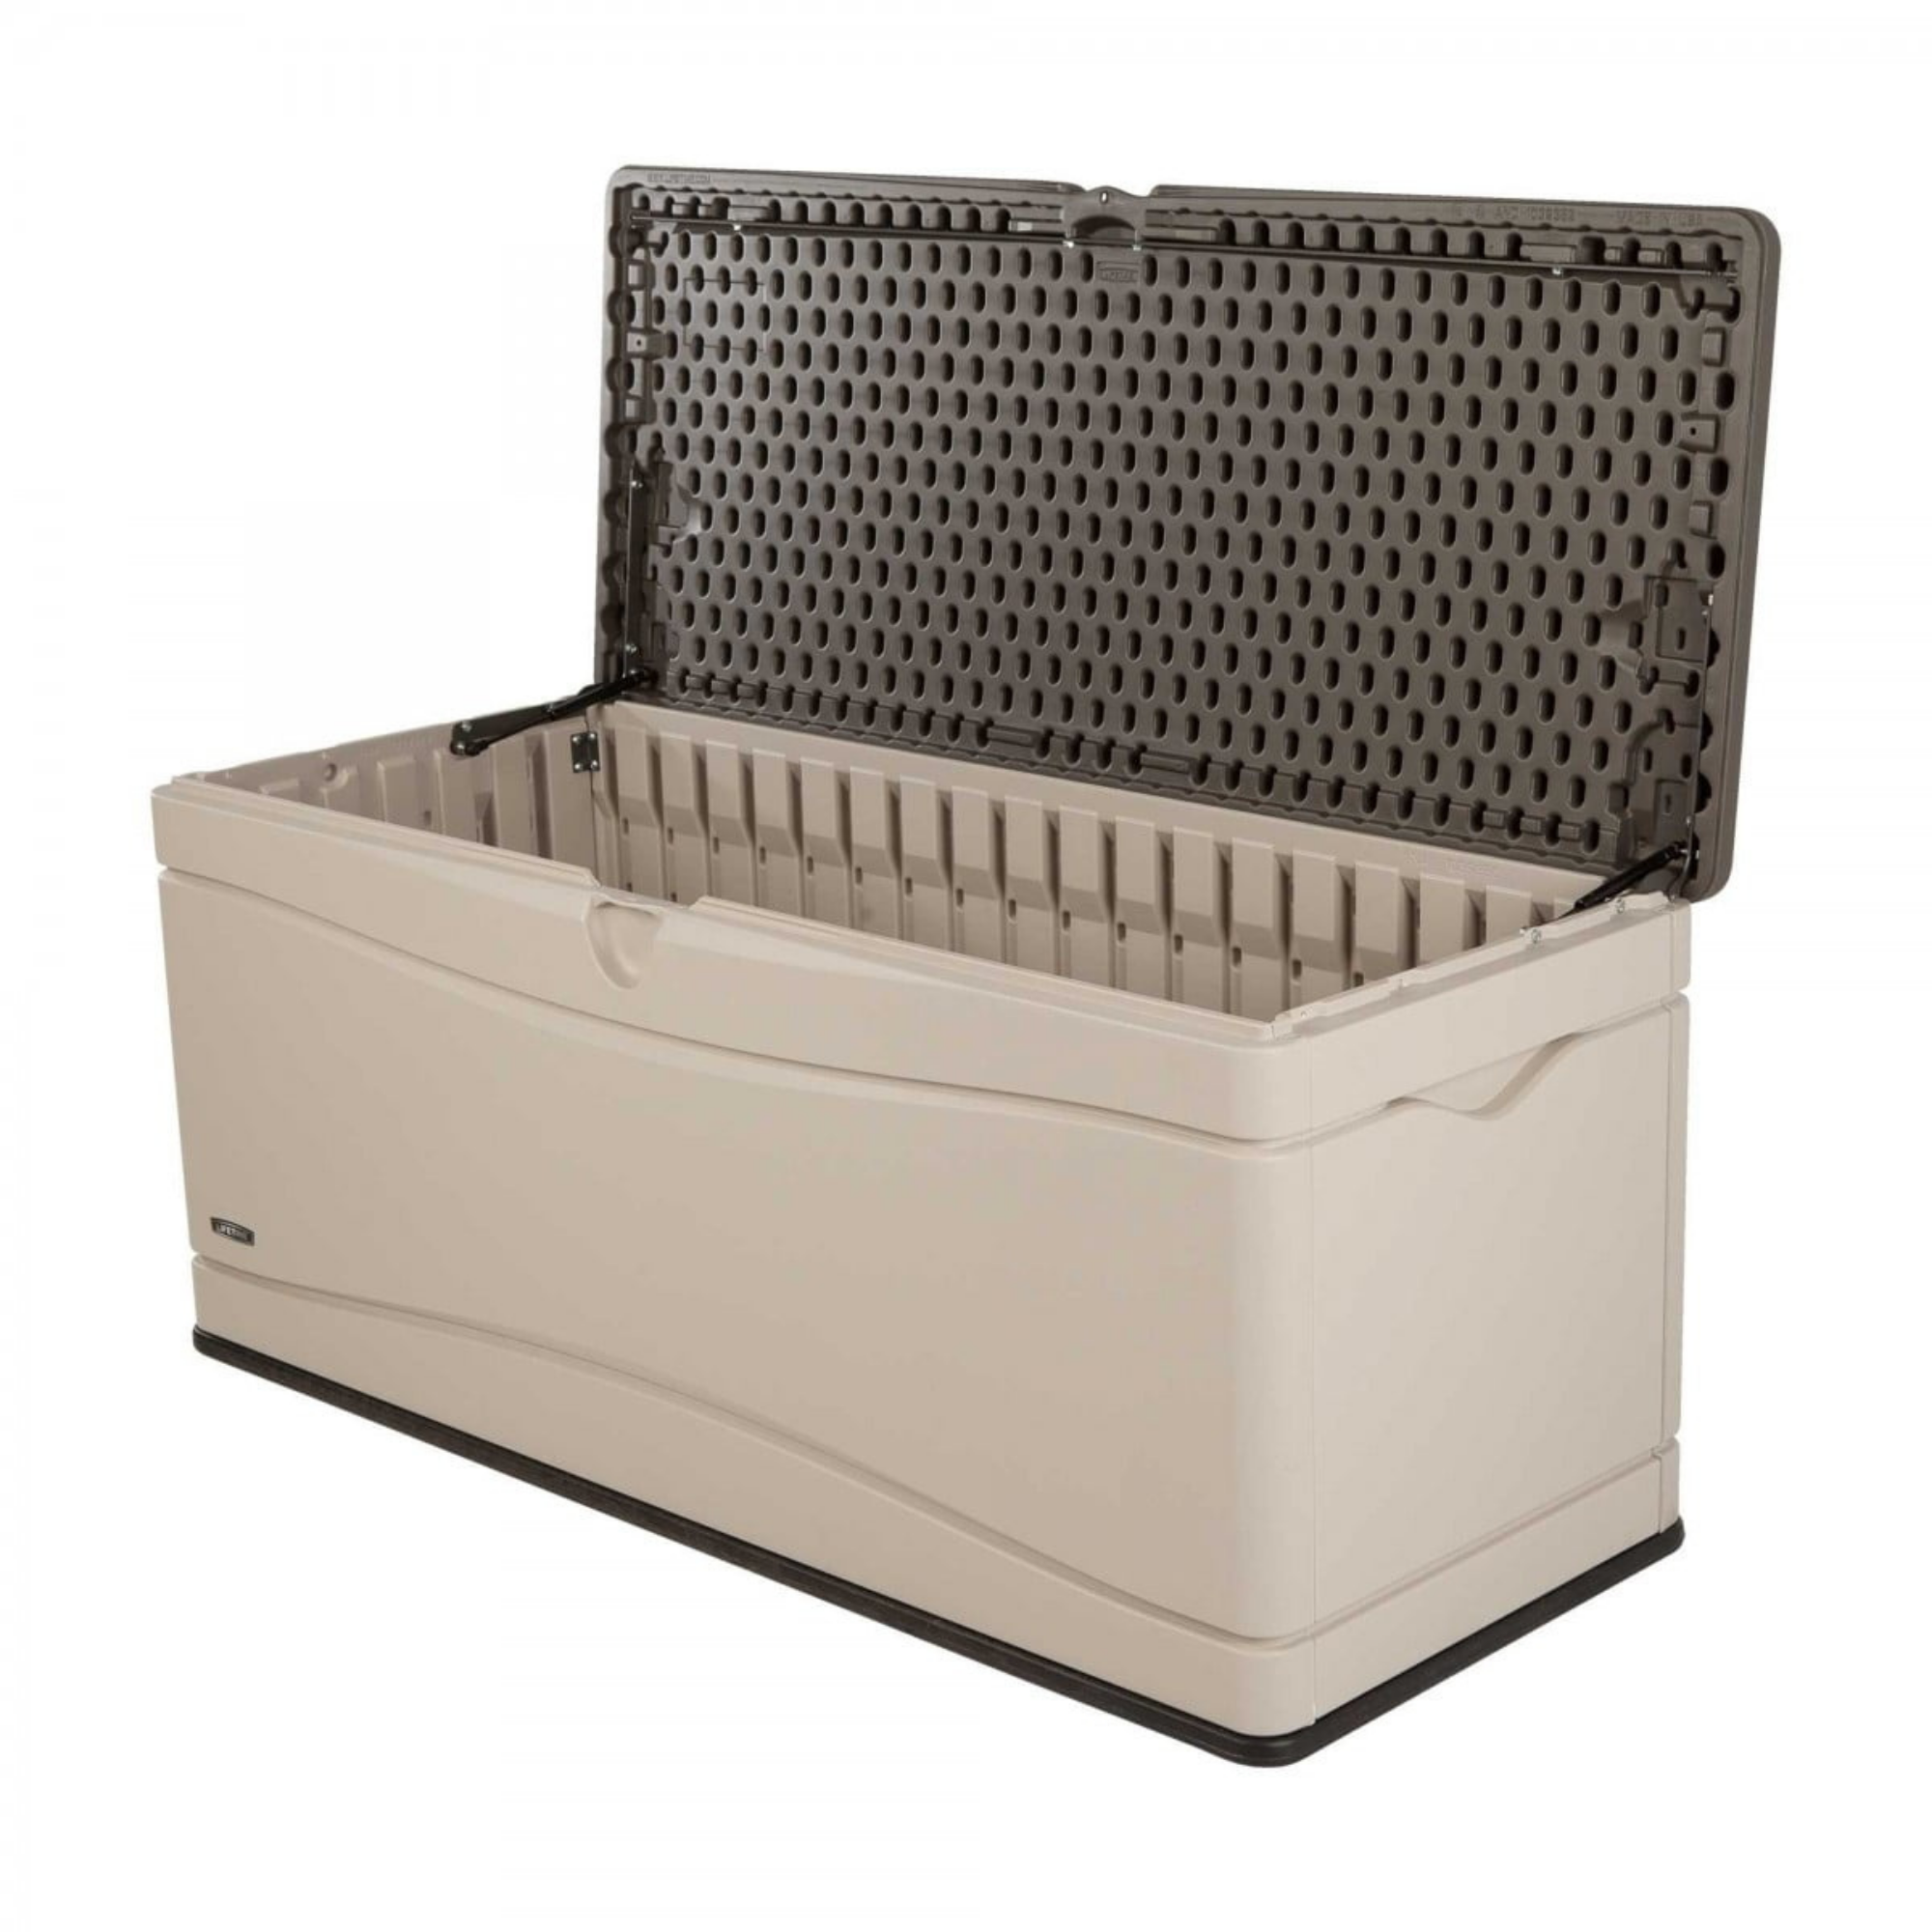 Lifetime 500L Plastic Outdoor Storage Box Brown/Desert Sand - 5x2